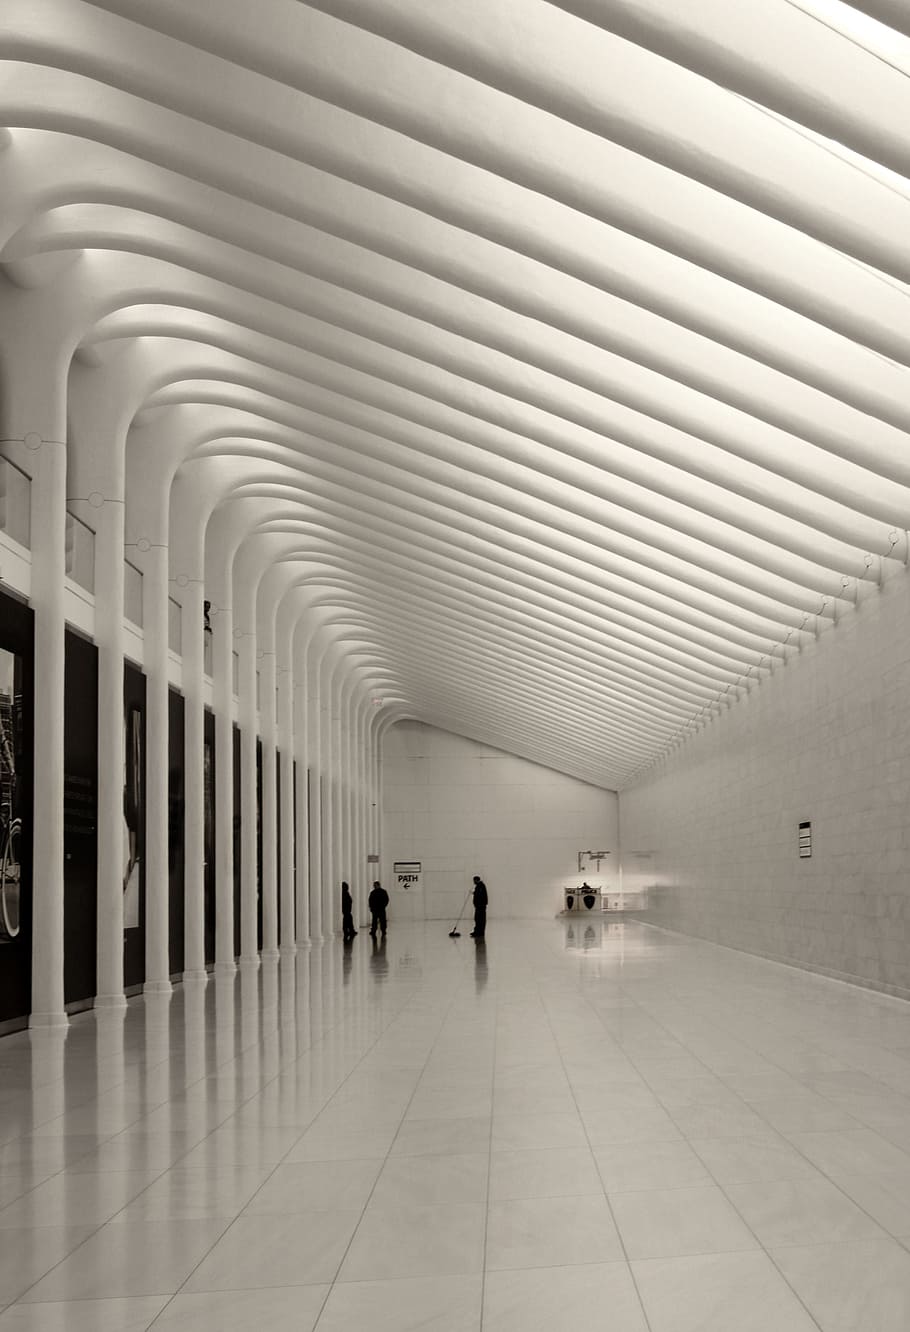 Path, Tunnel, White, Architecture, walkway, underground, exit, inside, passage, subway